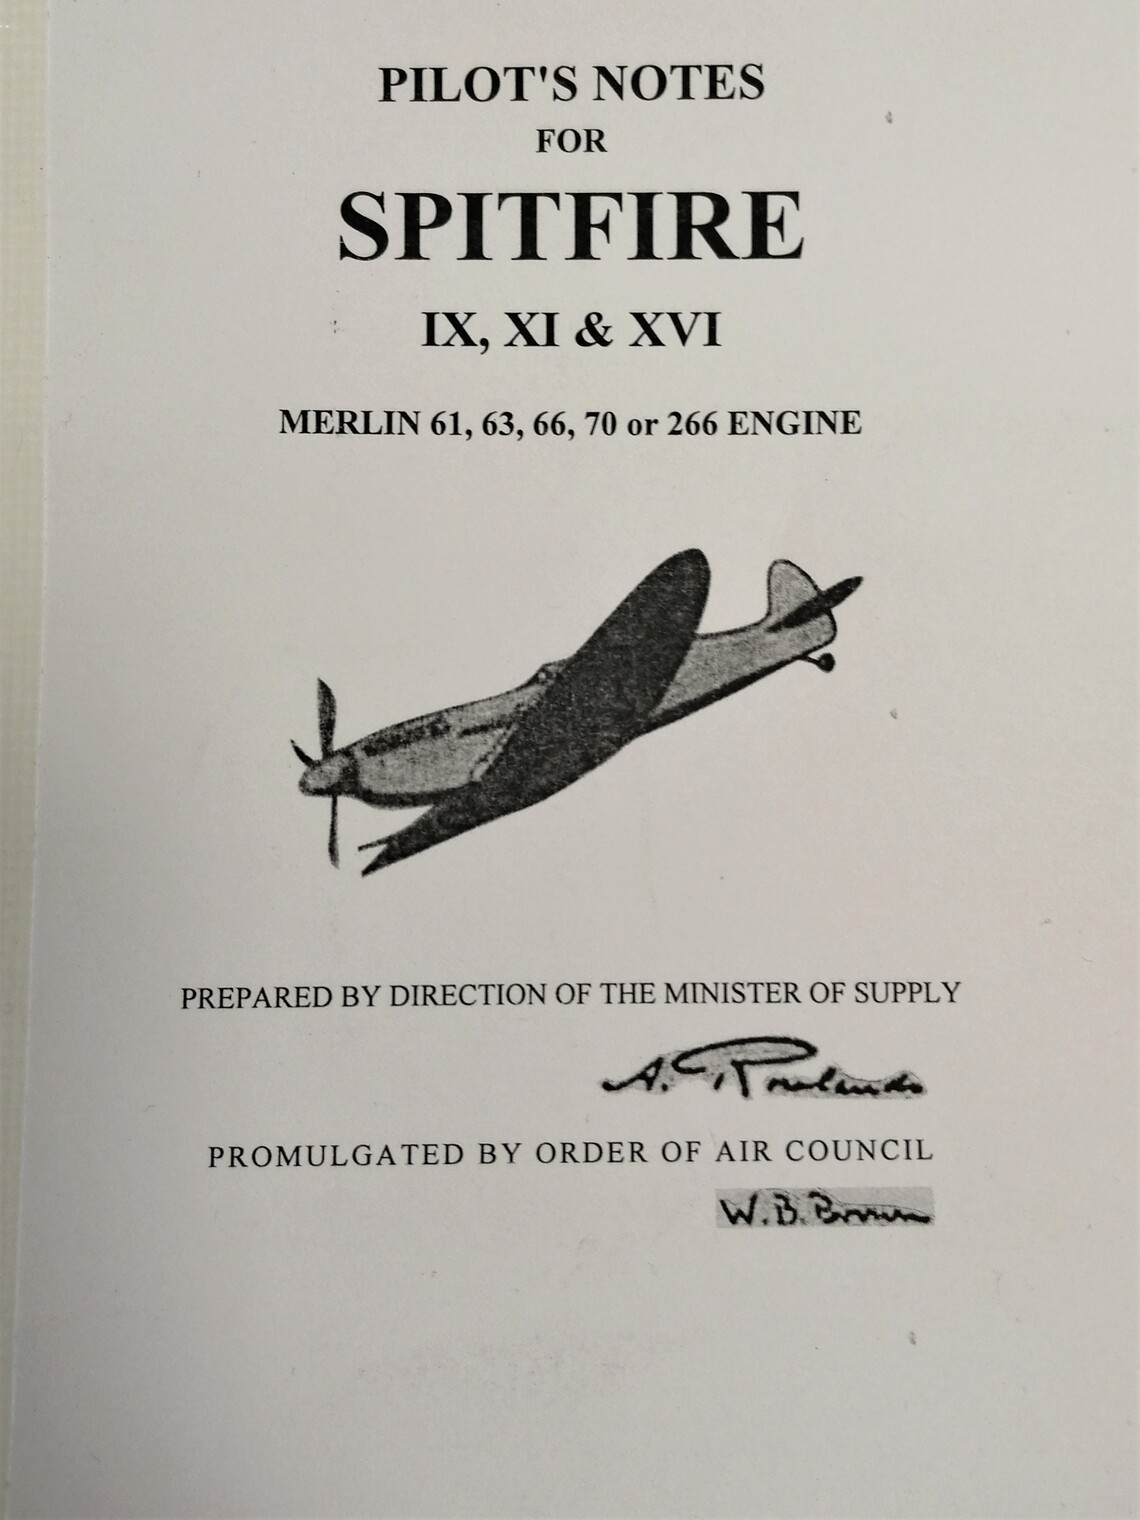 PILOT'S NOTES FOR SPITFIRE